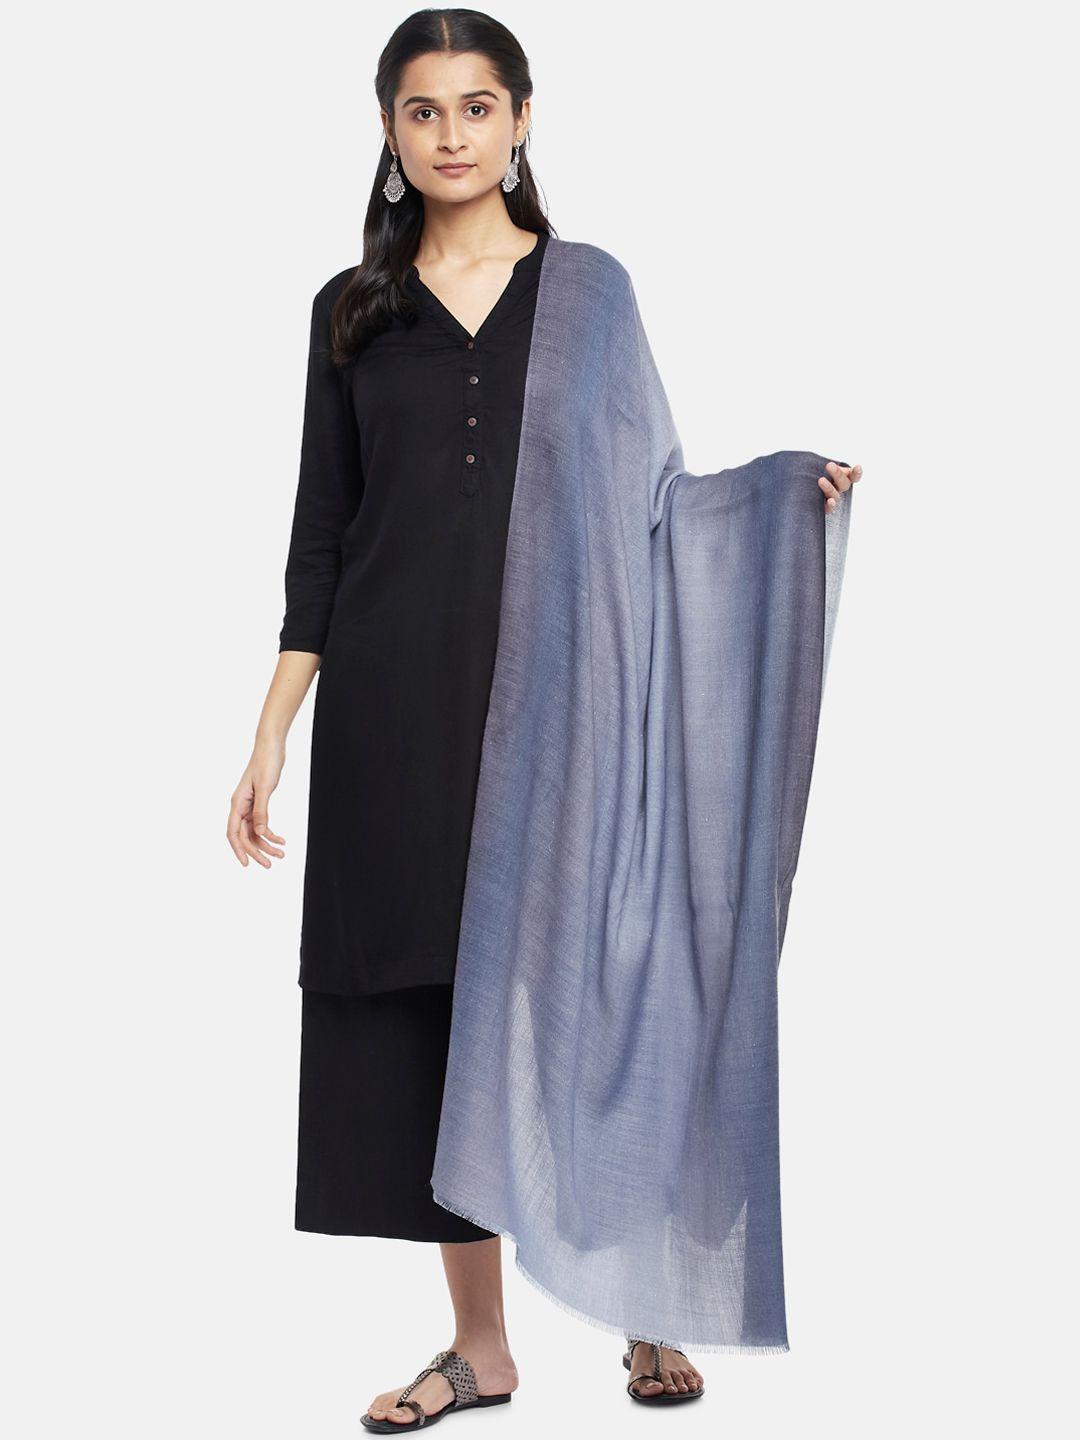 rangmanch by pantaloons women blue woven design shawl